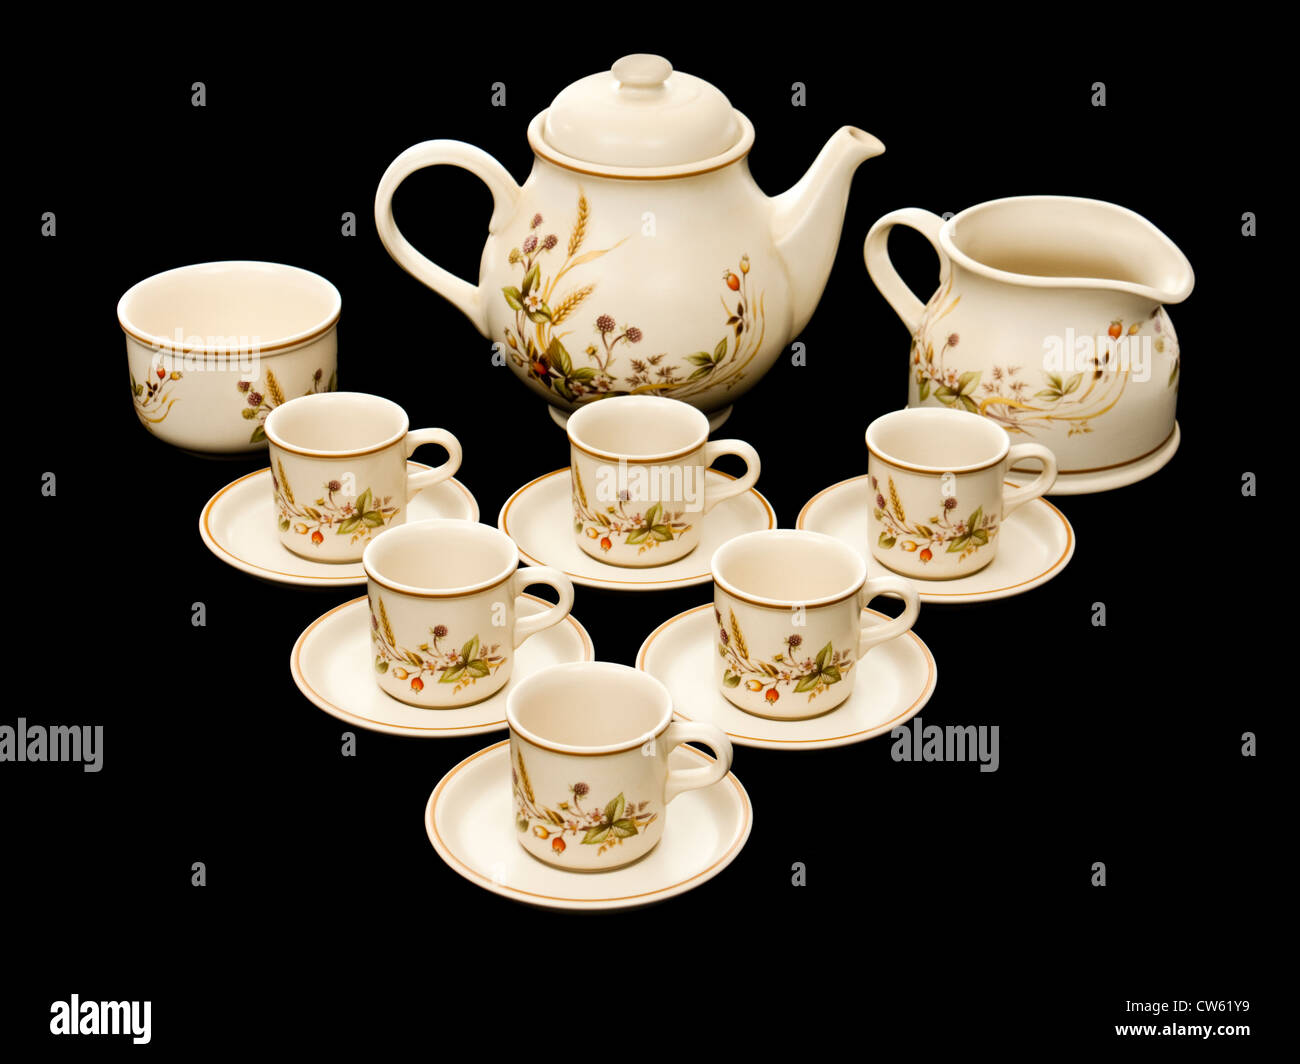 Marks & Spencer "Harvest" tea service Stock Photo - Alamy